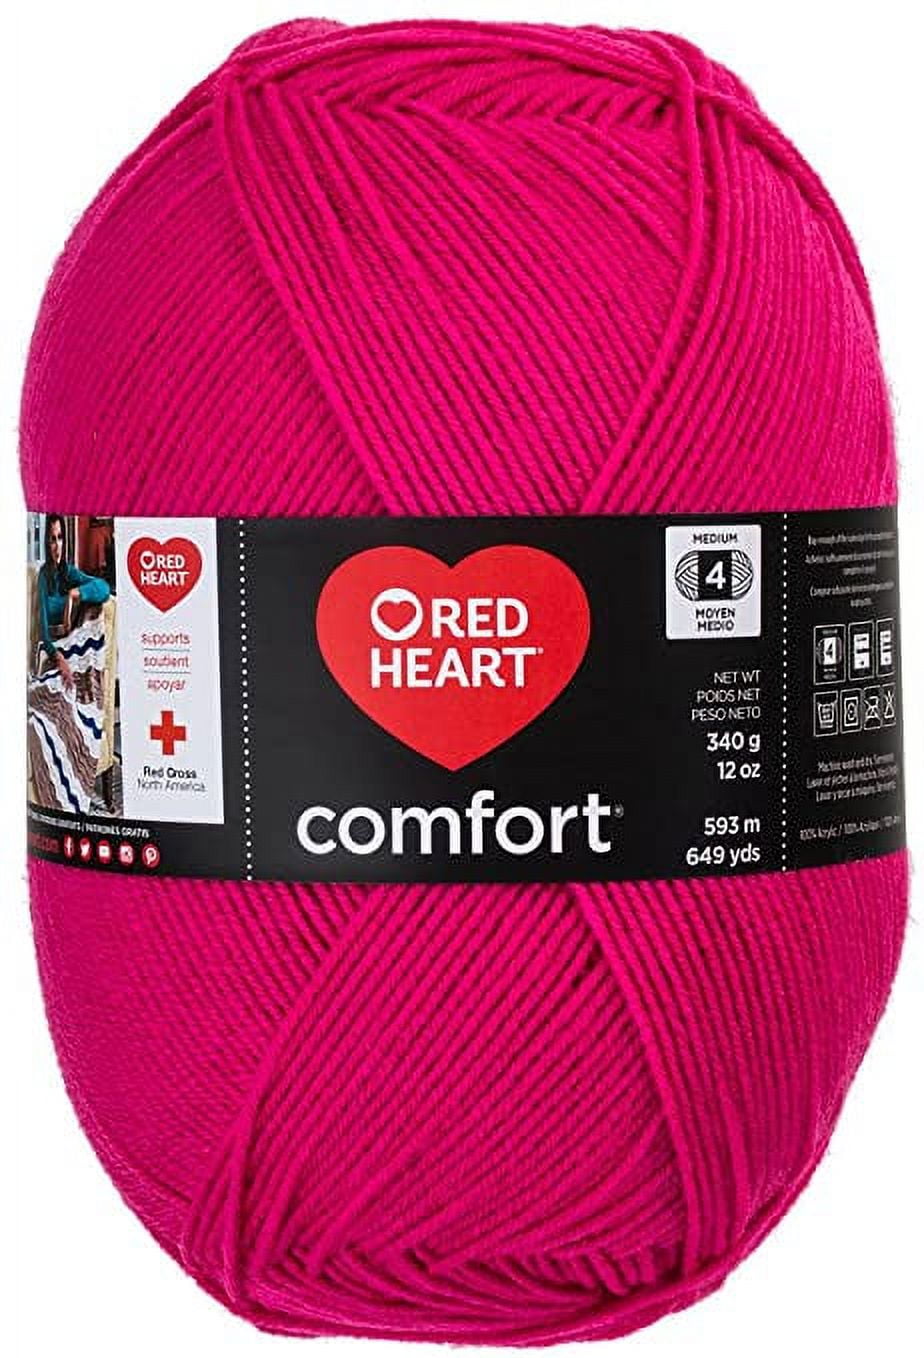  RED HEART 067898051767 Comfort Yarn, Tan